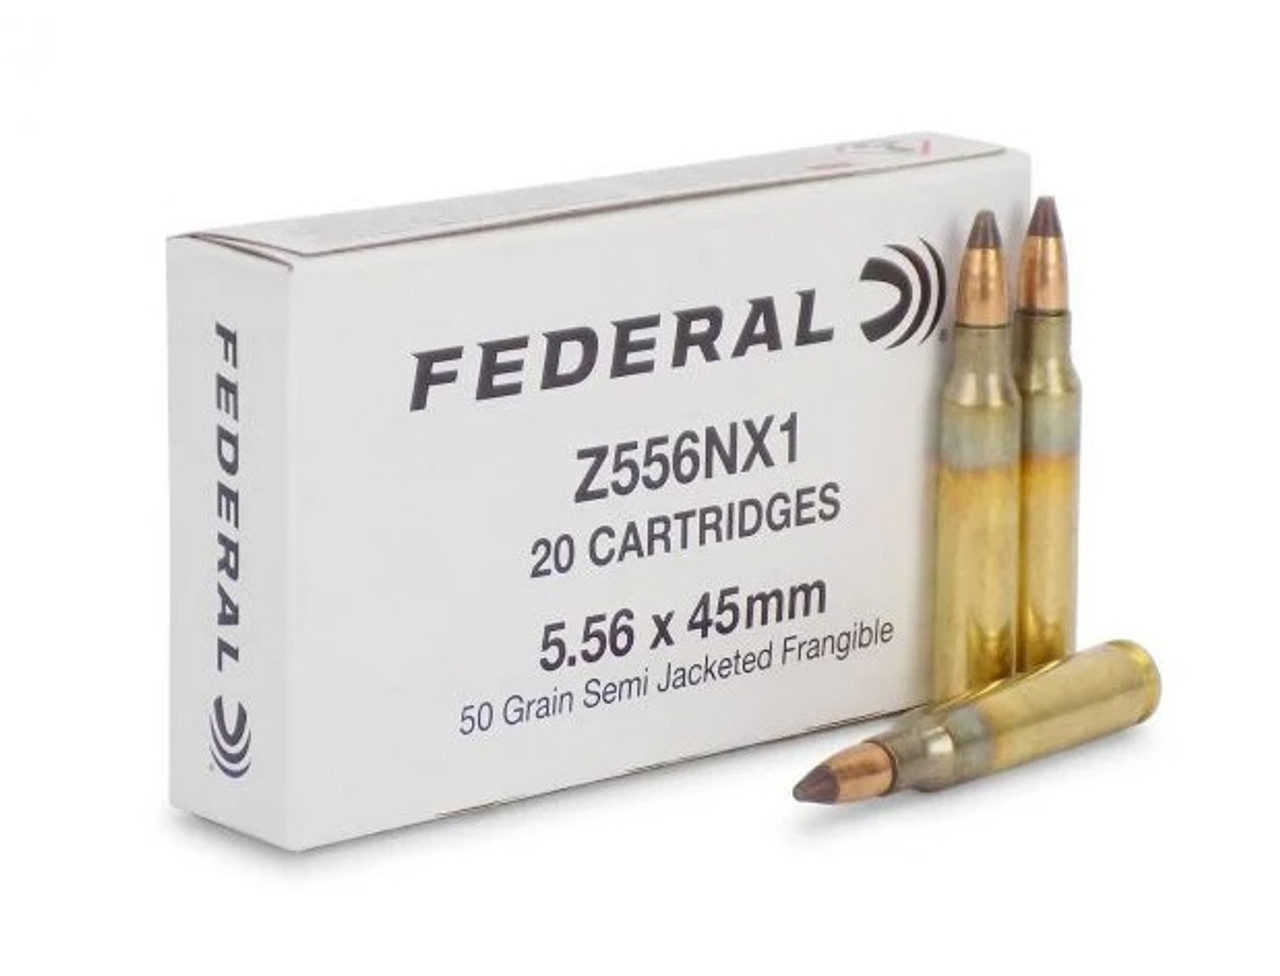 federal-5-56x45mm-ammunition-z556nx1-50-grain-semi-jacketed-frangible